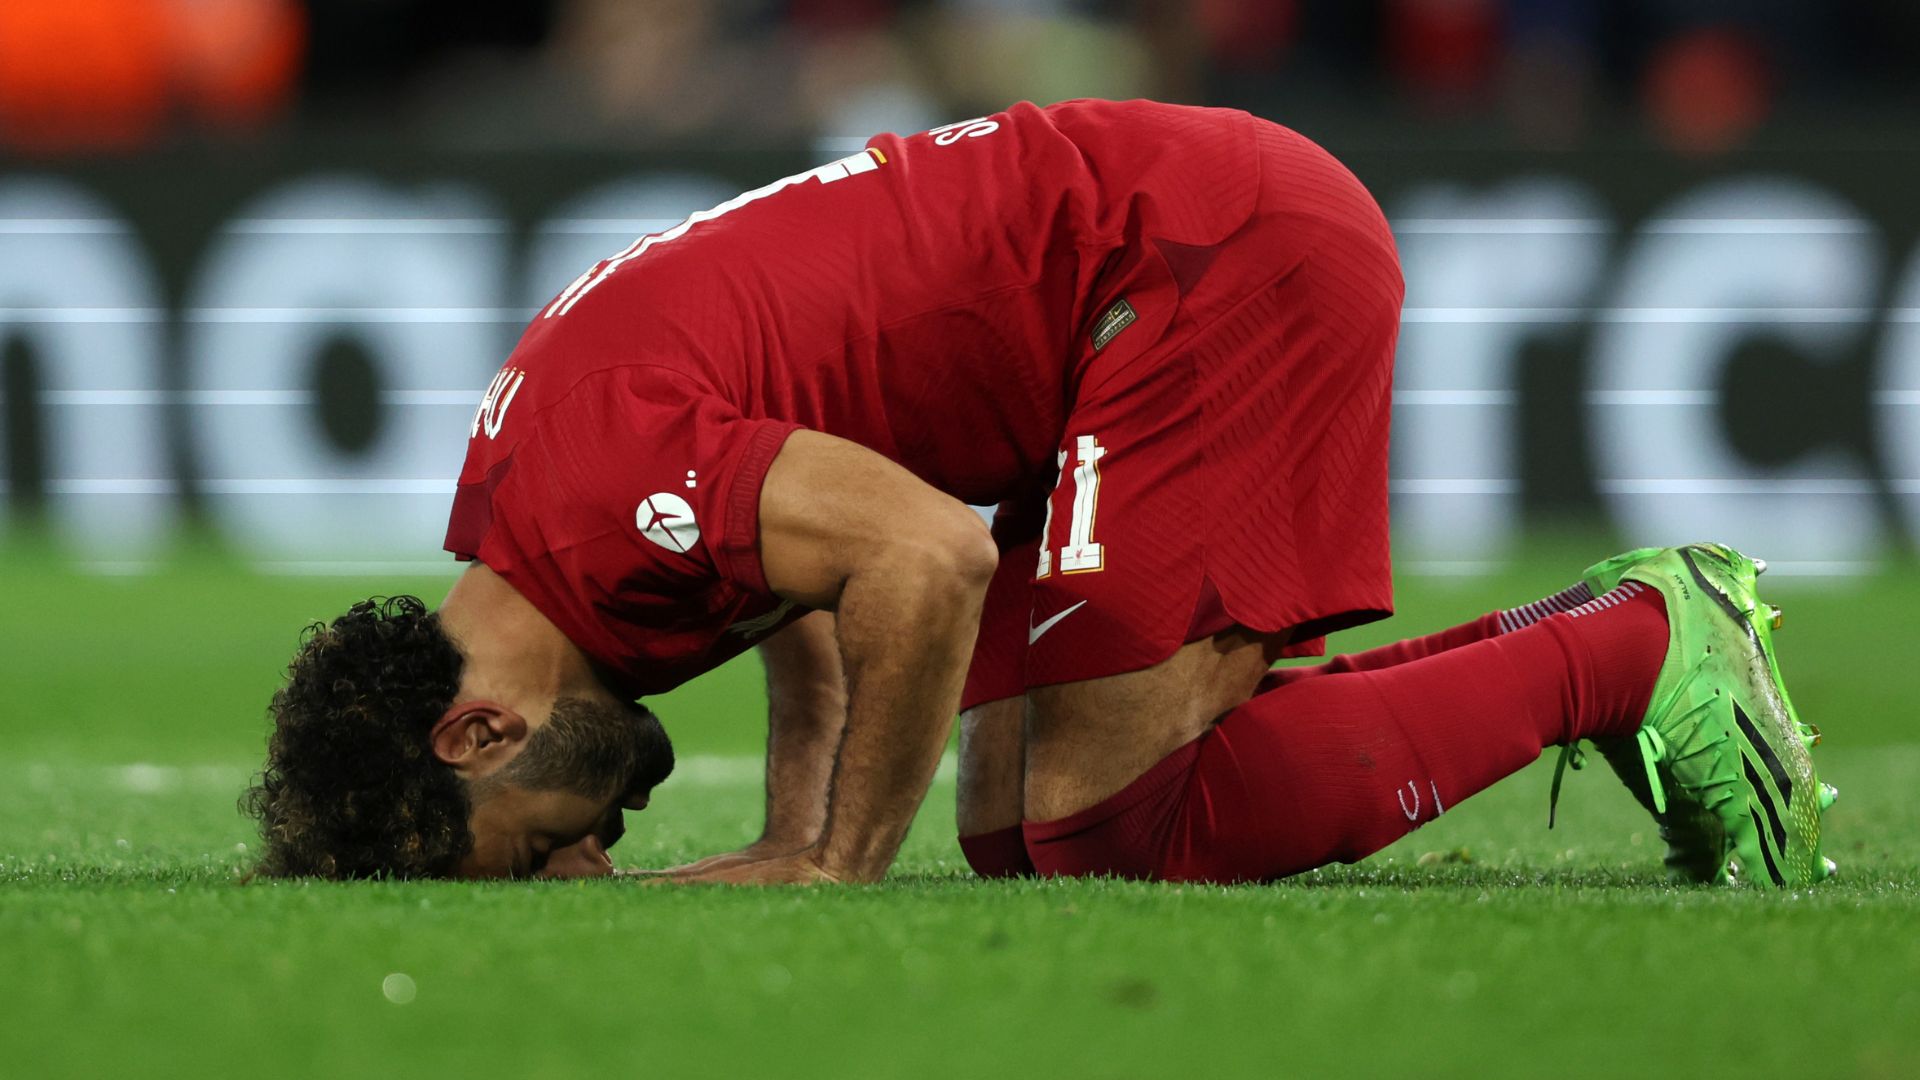 Mohamed Salah comemorando o gol na partida